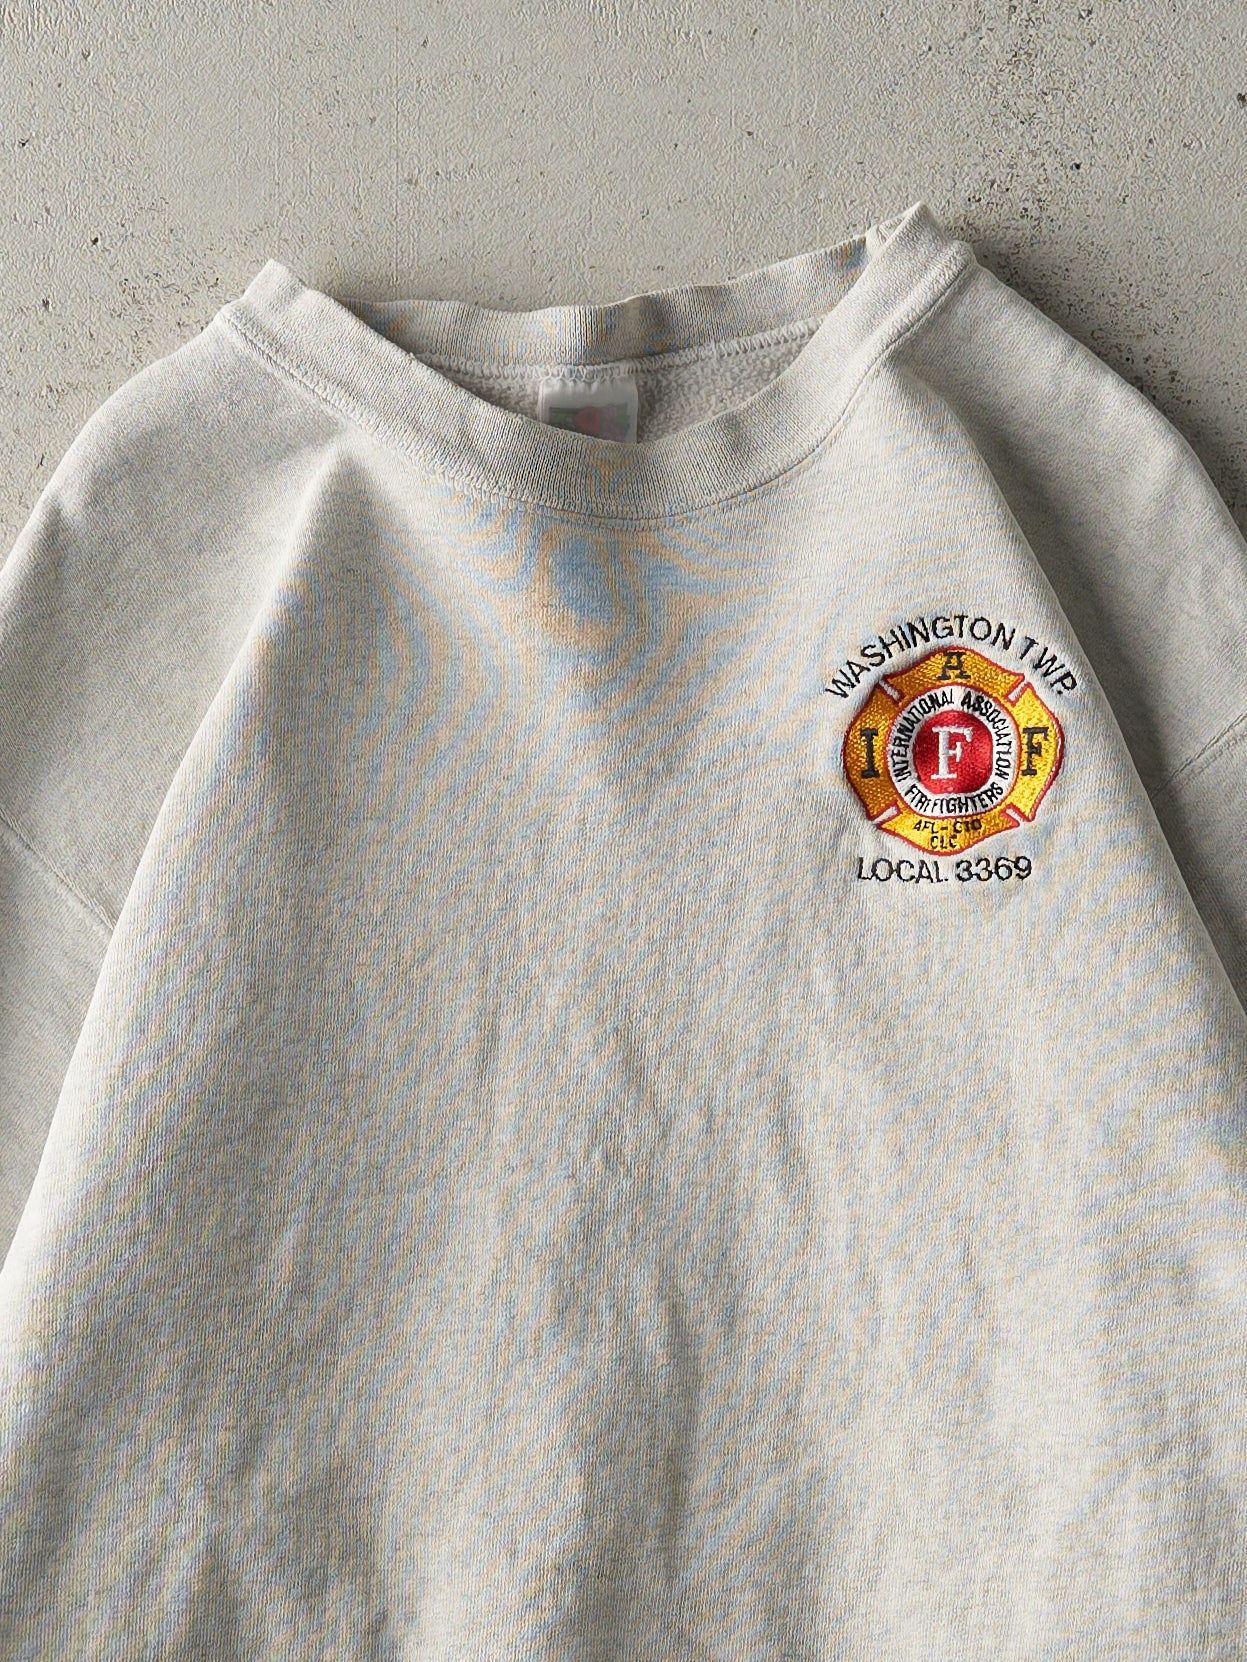 Vintage 90s Heather Grey Embroidered Washington Fire Fighters IAF Crewneck (M)